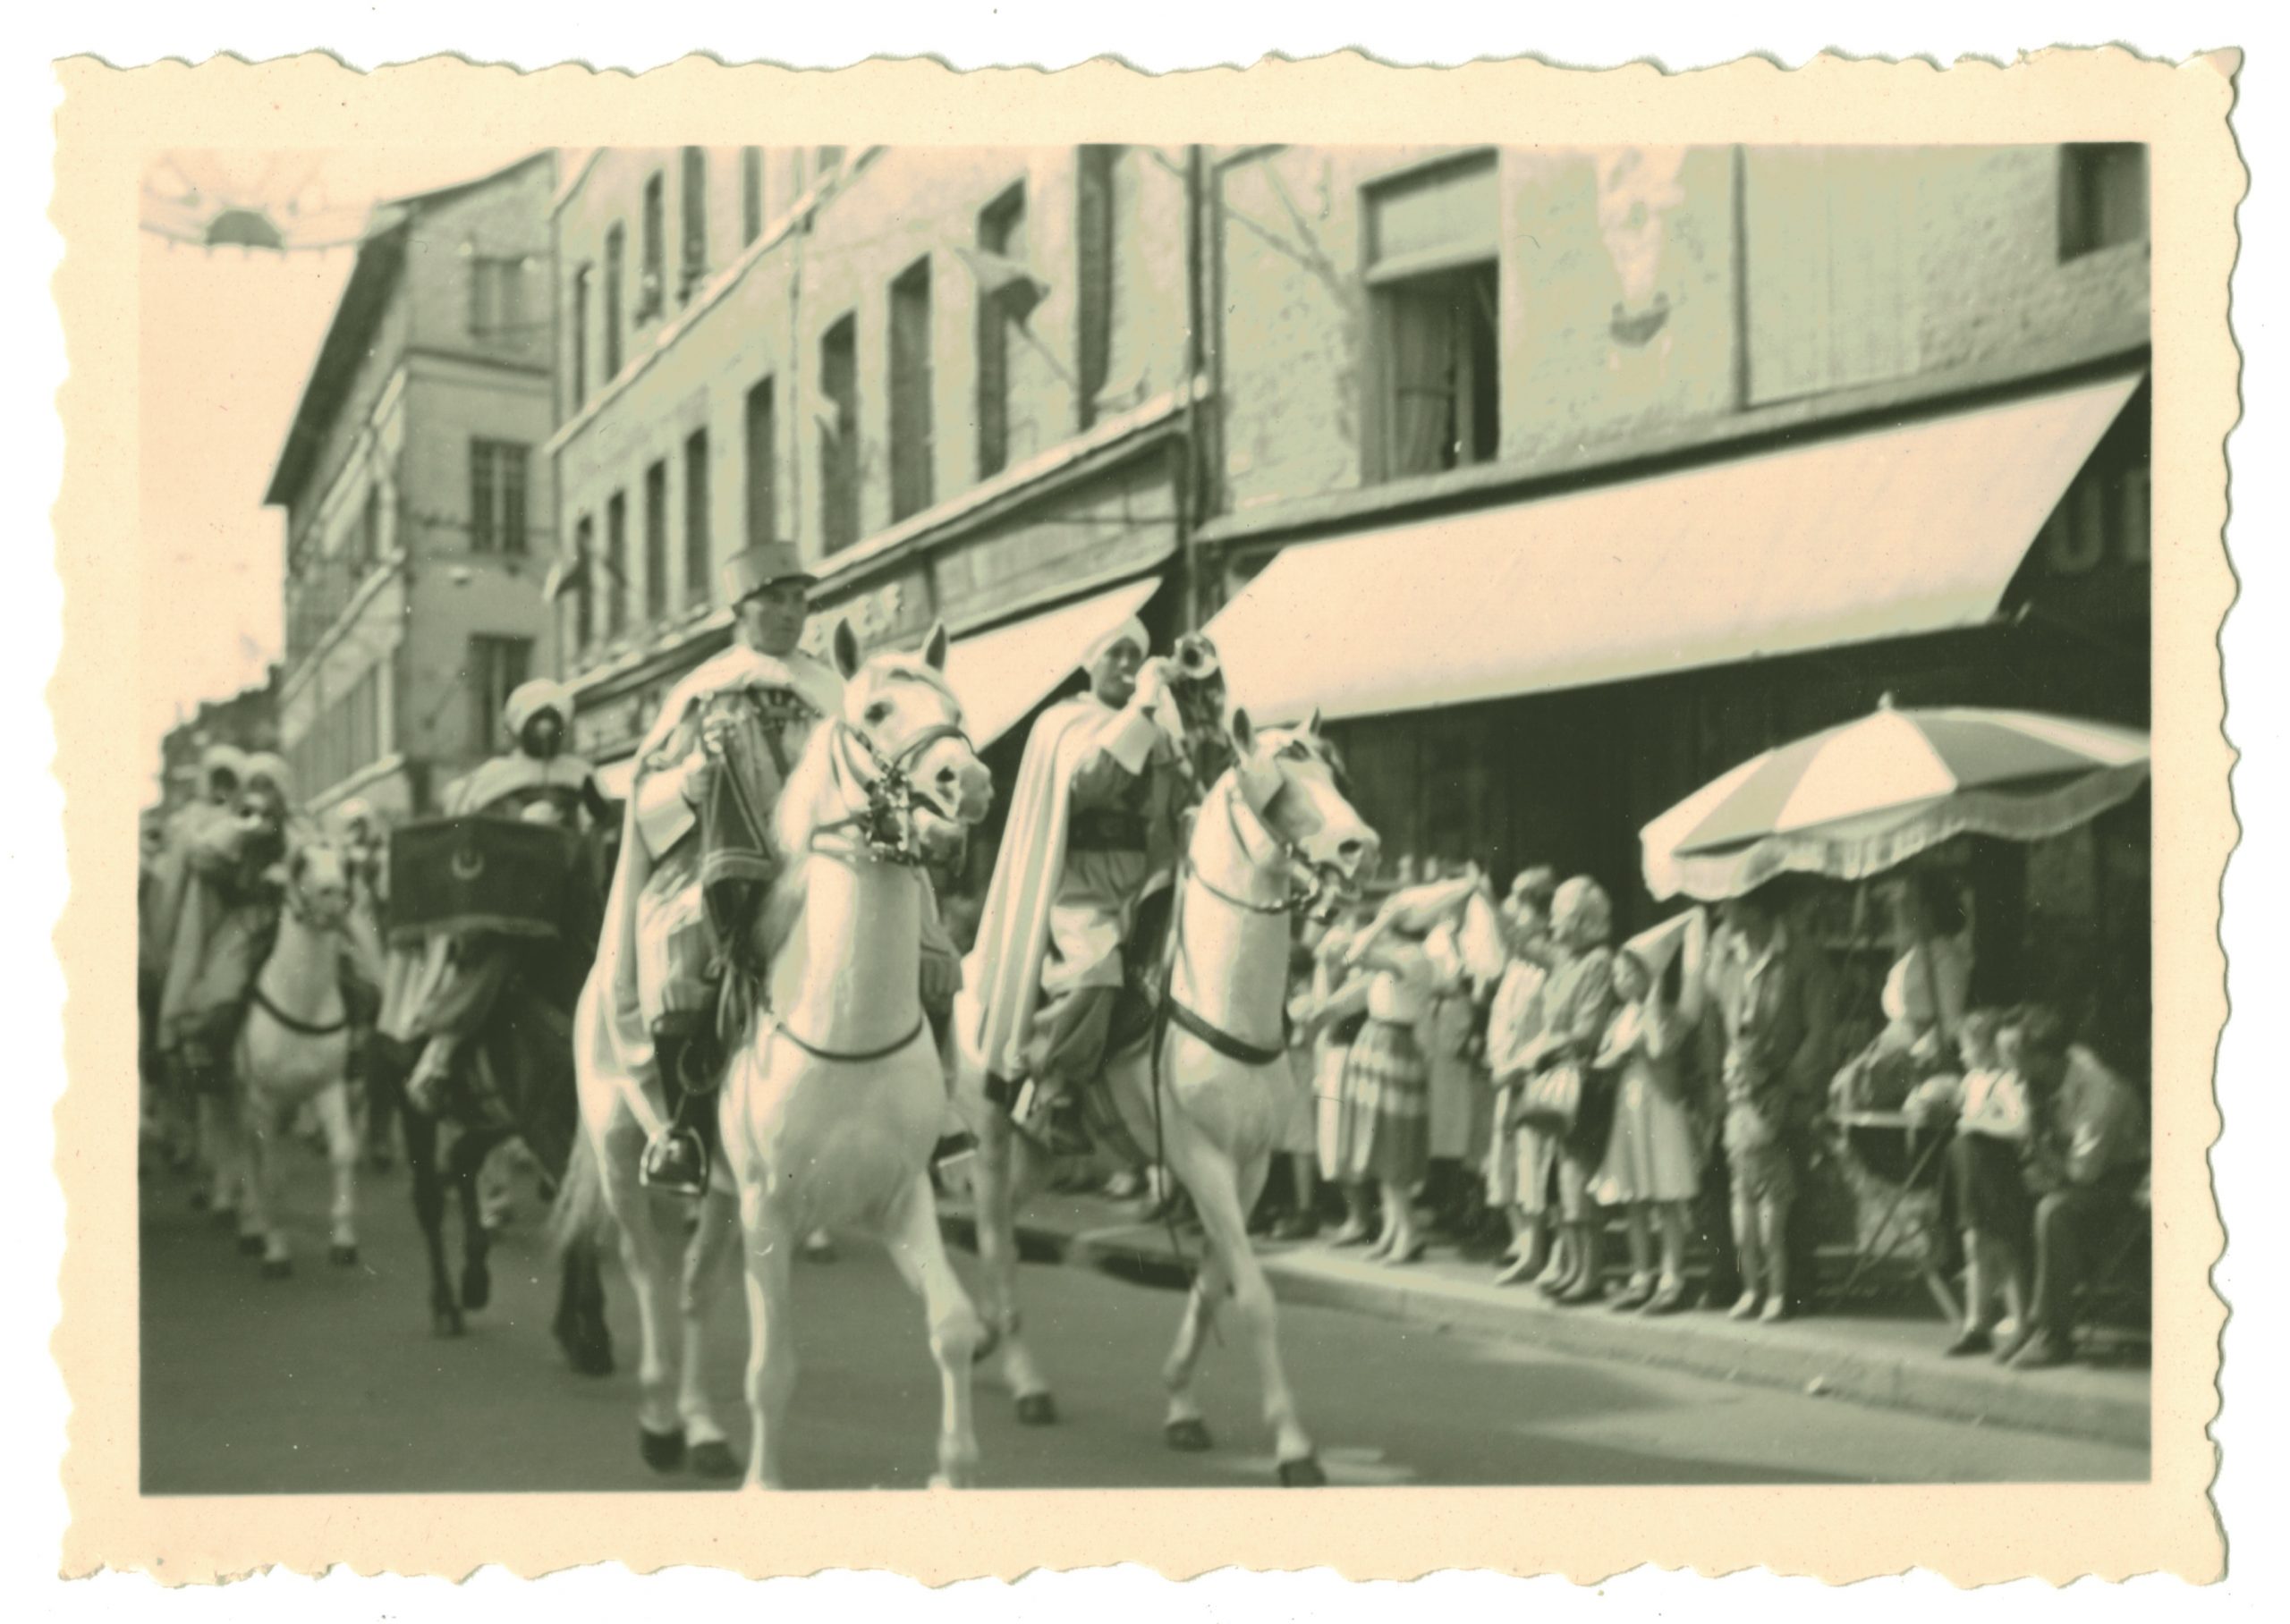 4 Photos Snapshot - 1950/1960 - Spahis défilé - Village France